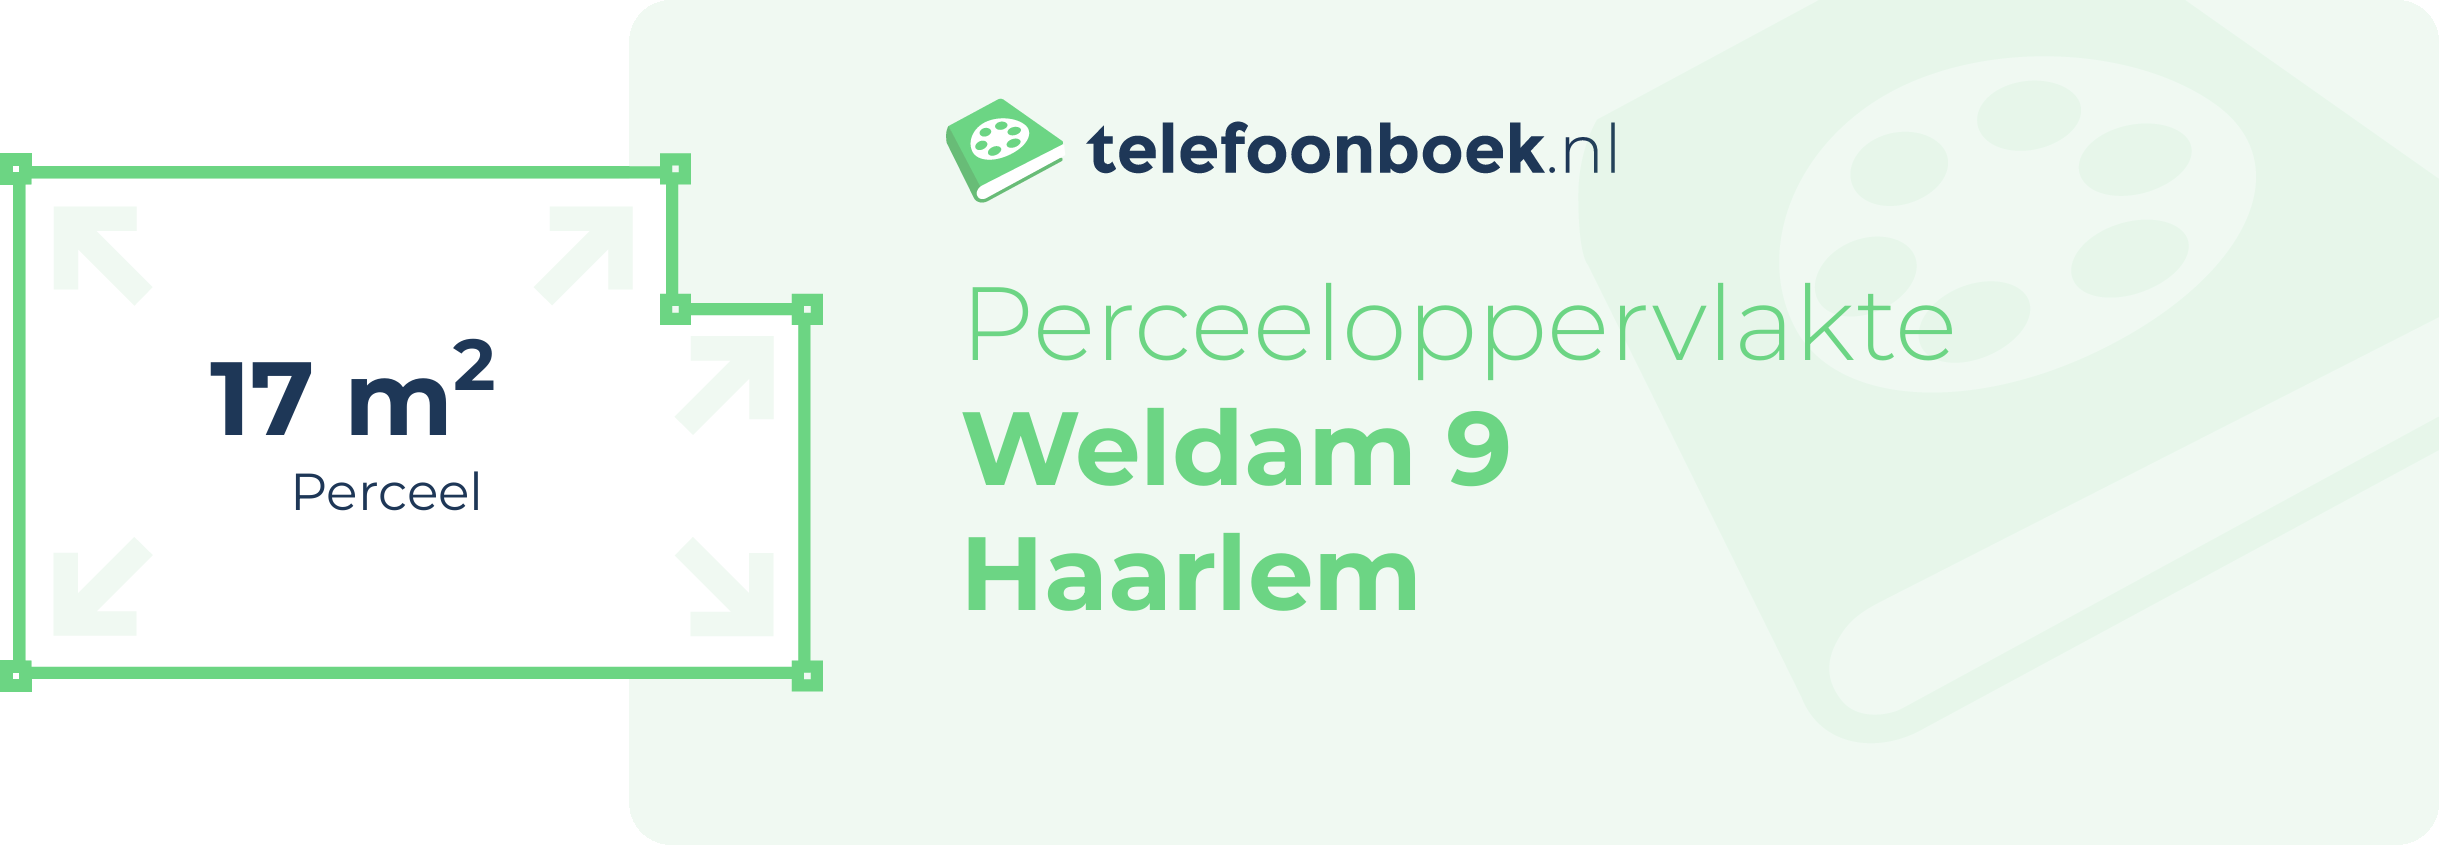 Perceeloppervlakte Weldam 9 Haarlem